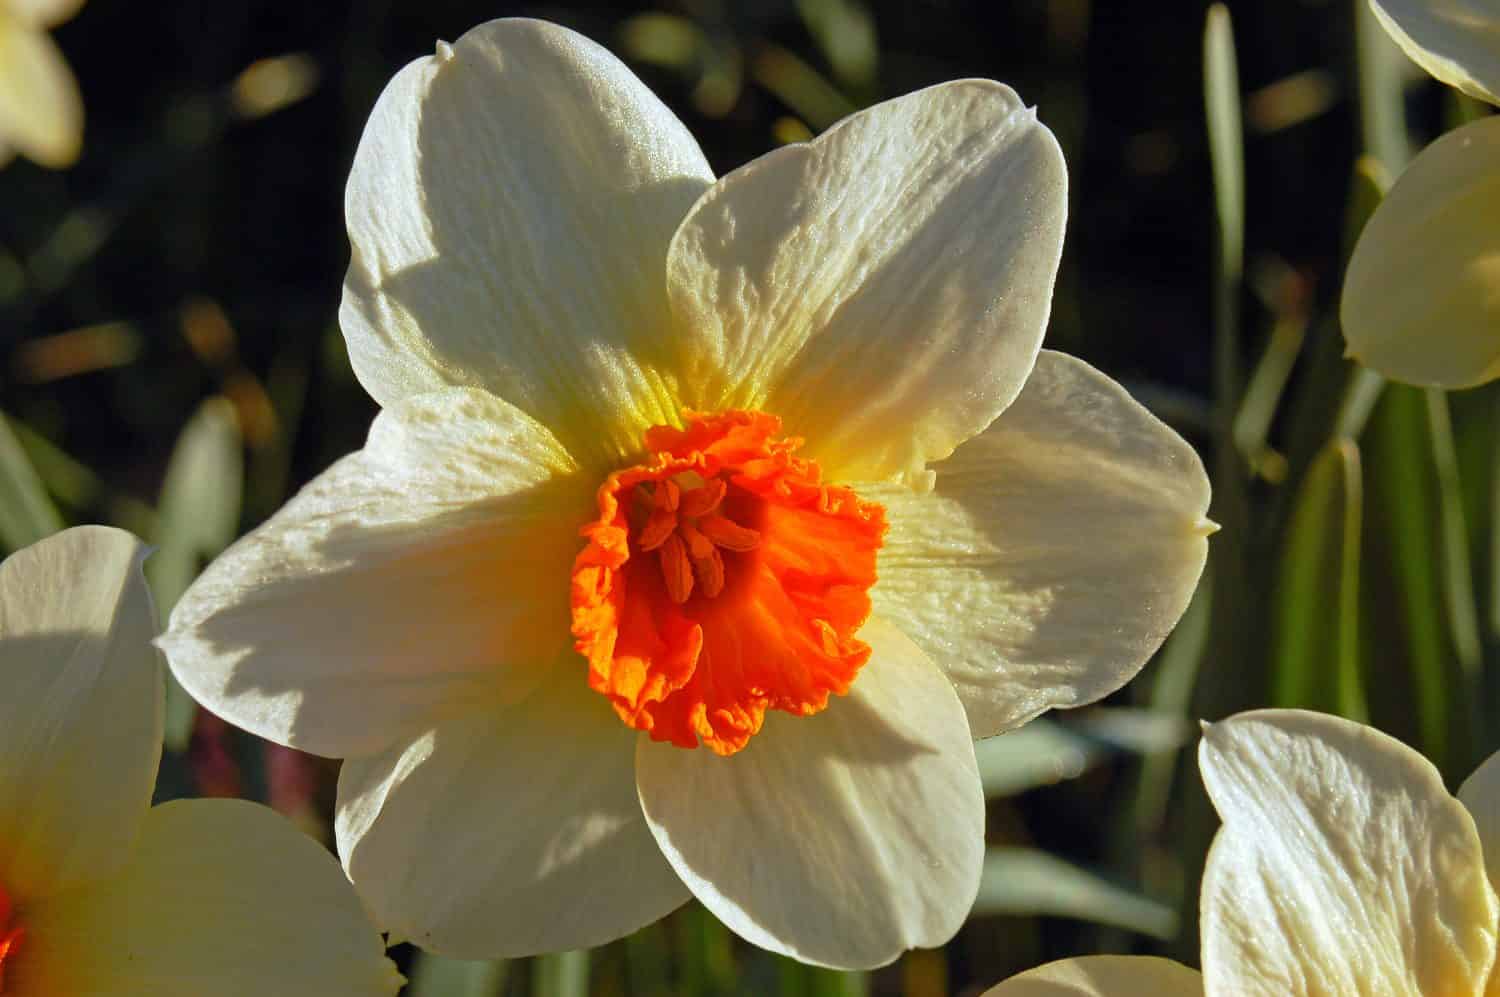 A daffodil blooms in a garden